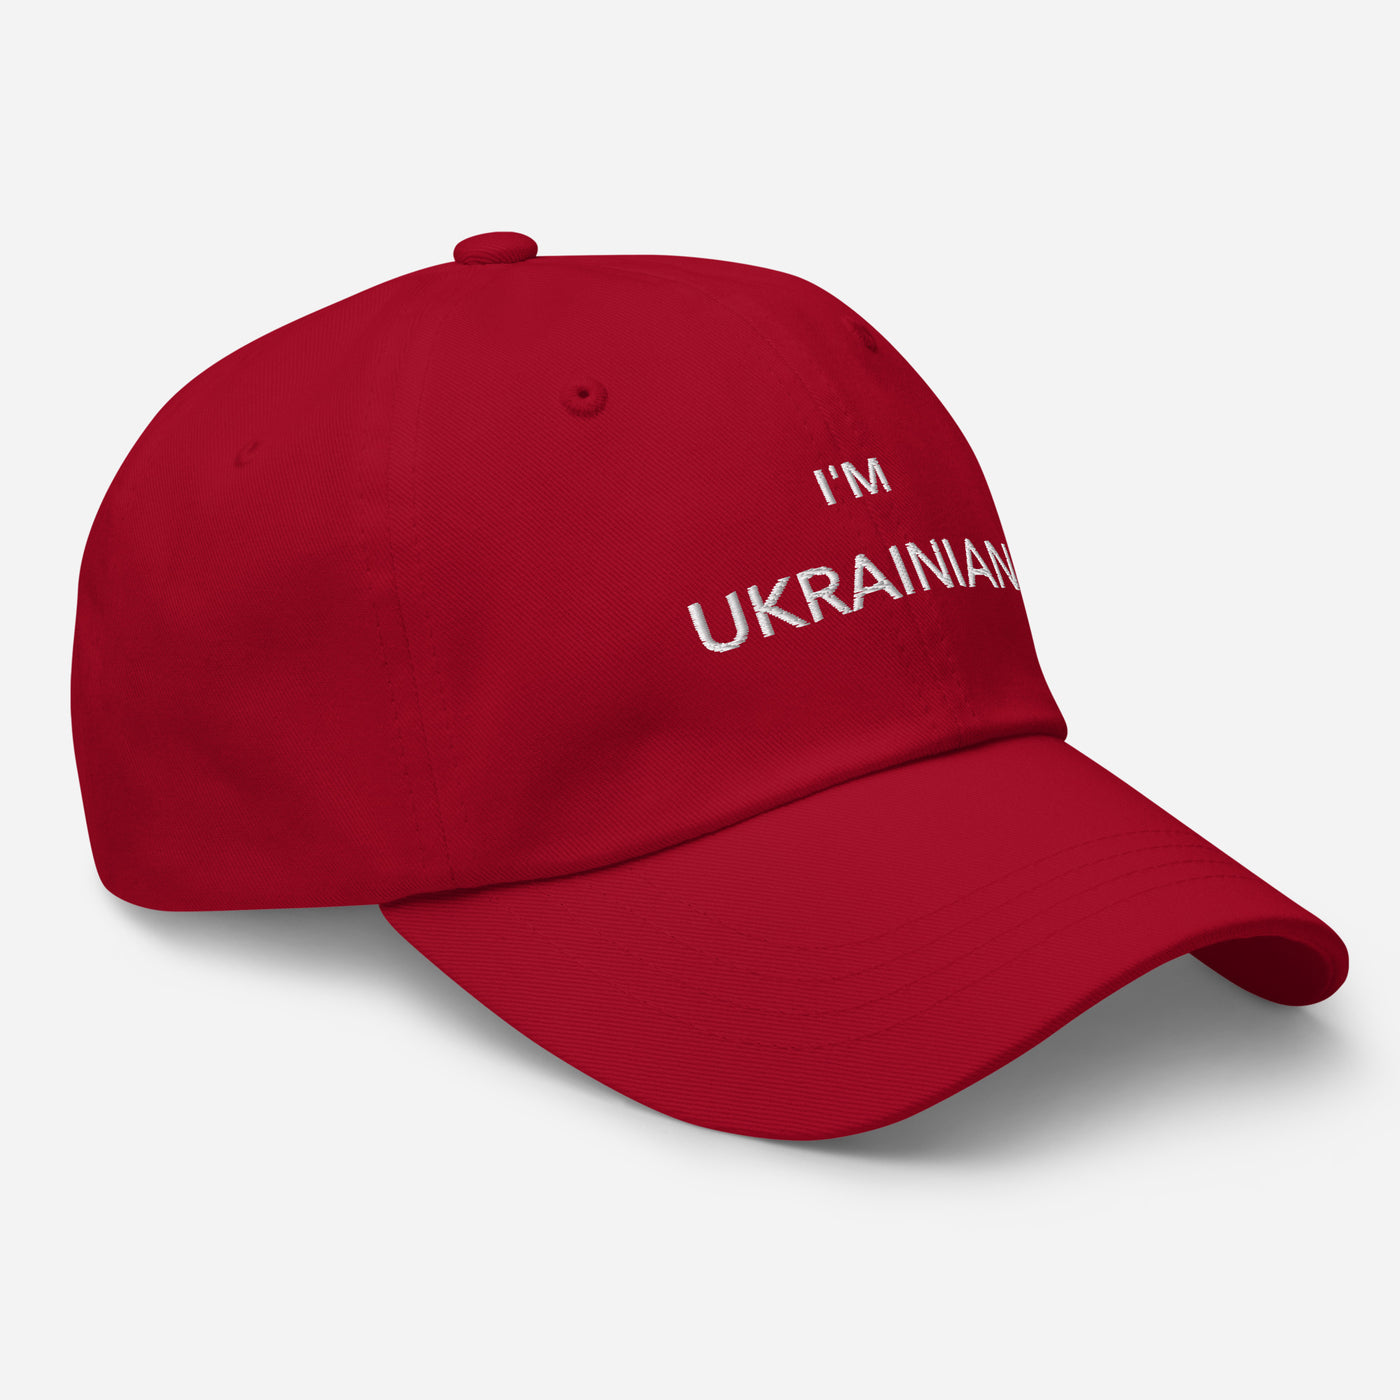 I'M UKRAINIAN Cap Embroidery